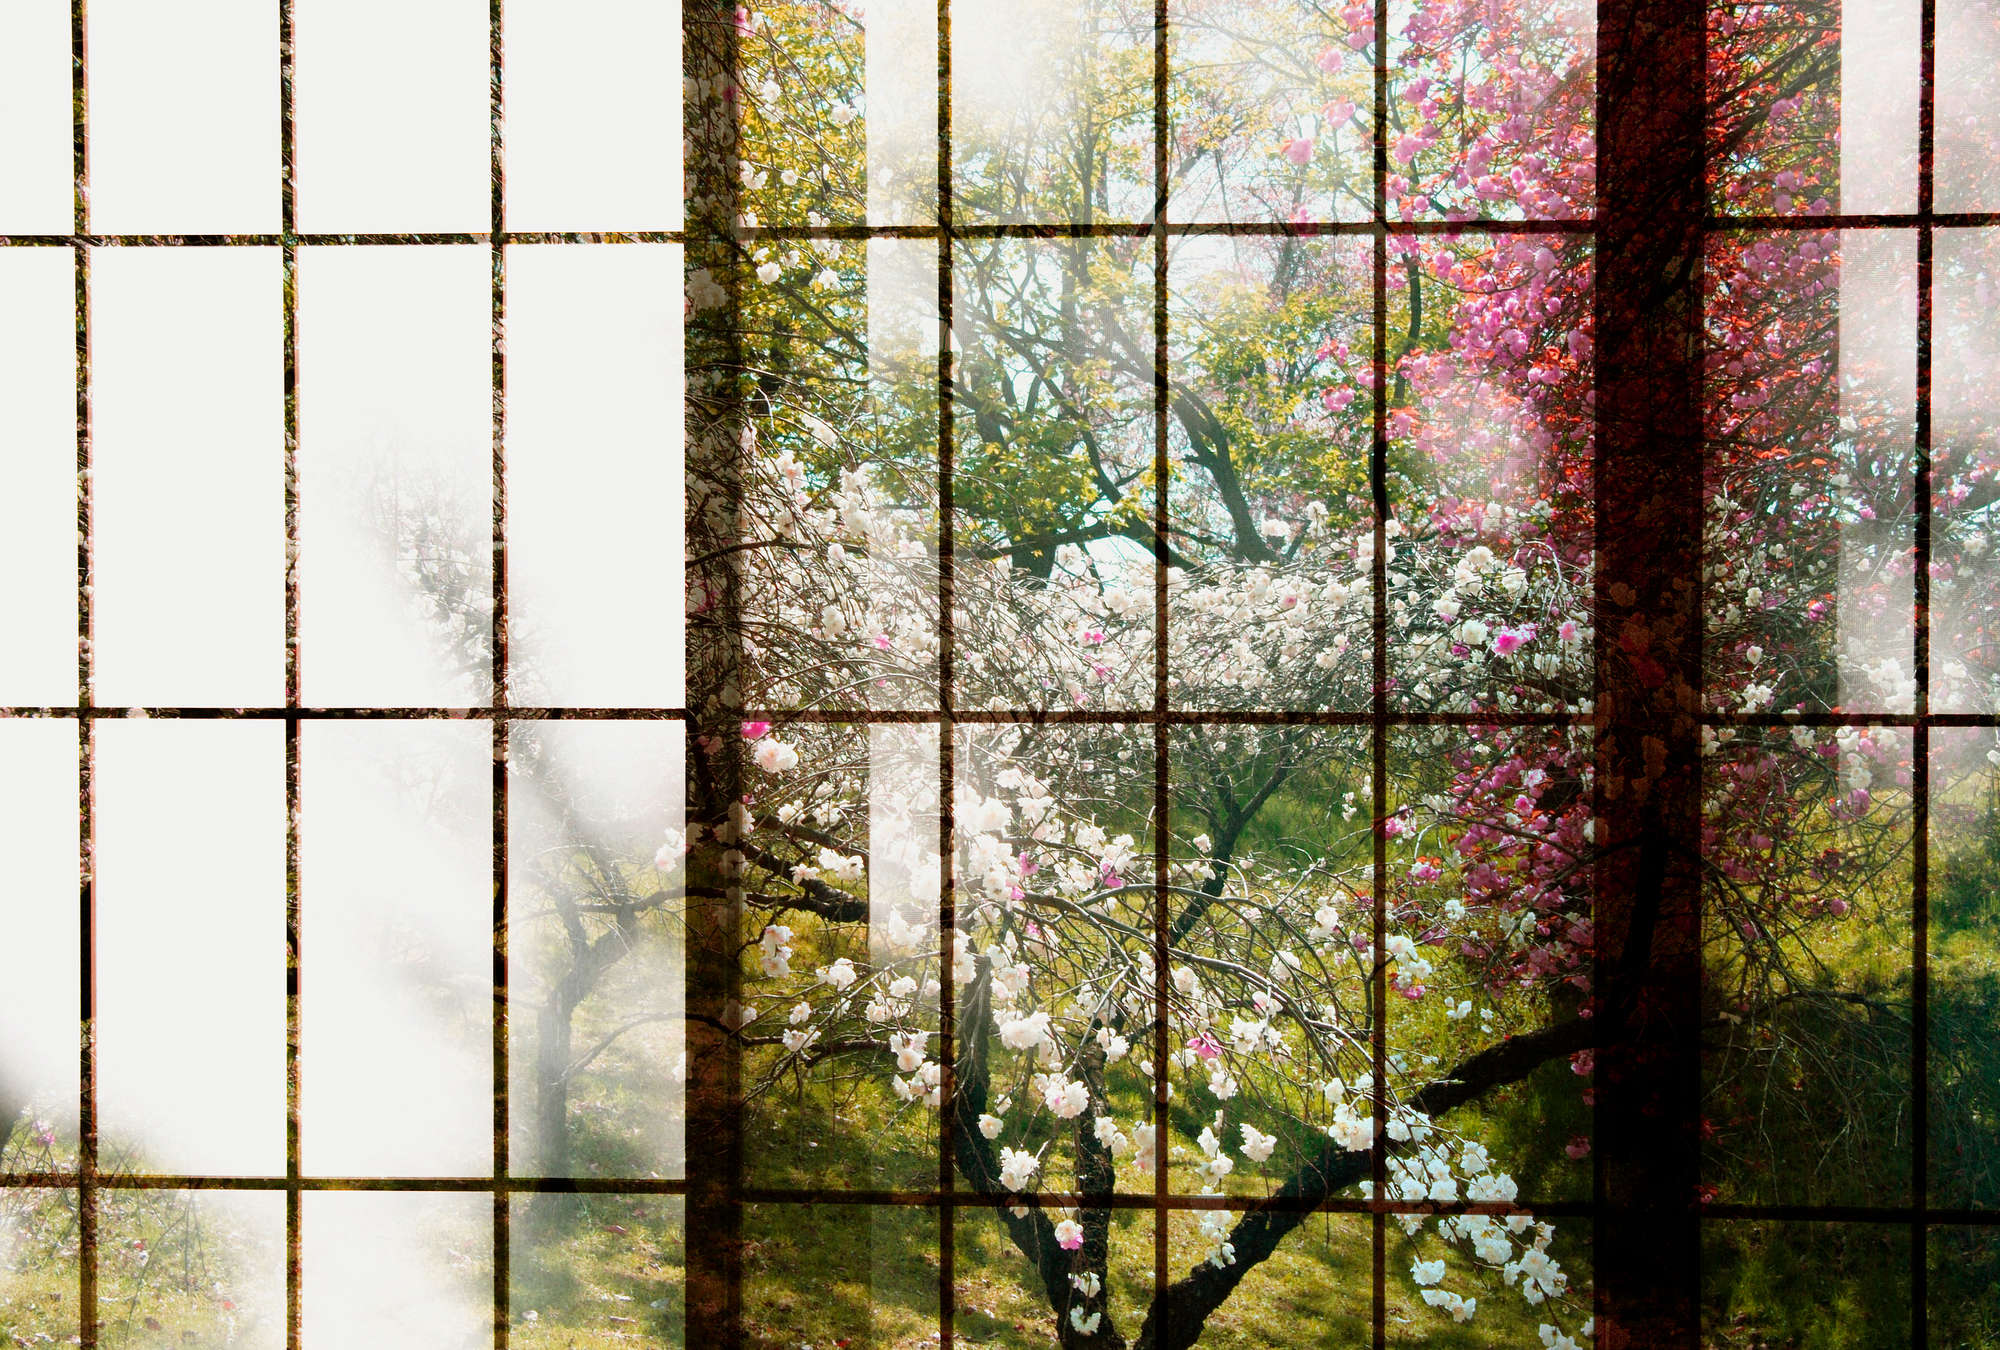             Orchard 1 - Fotomurali, Finestra con vista sul giardino - Verde, Rosa | Panno liscio opaco
        